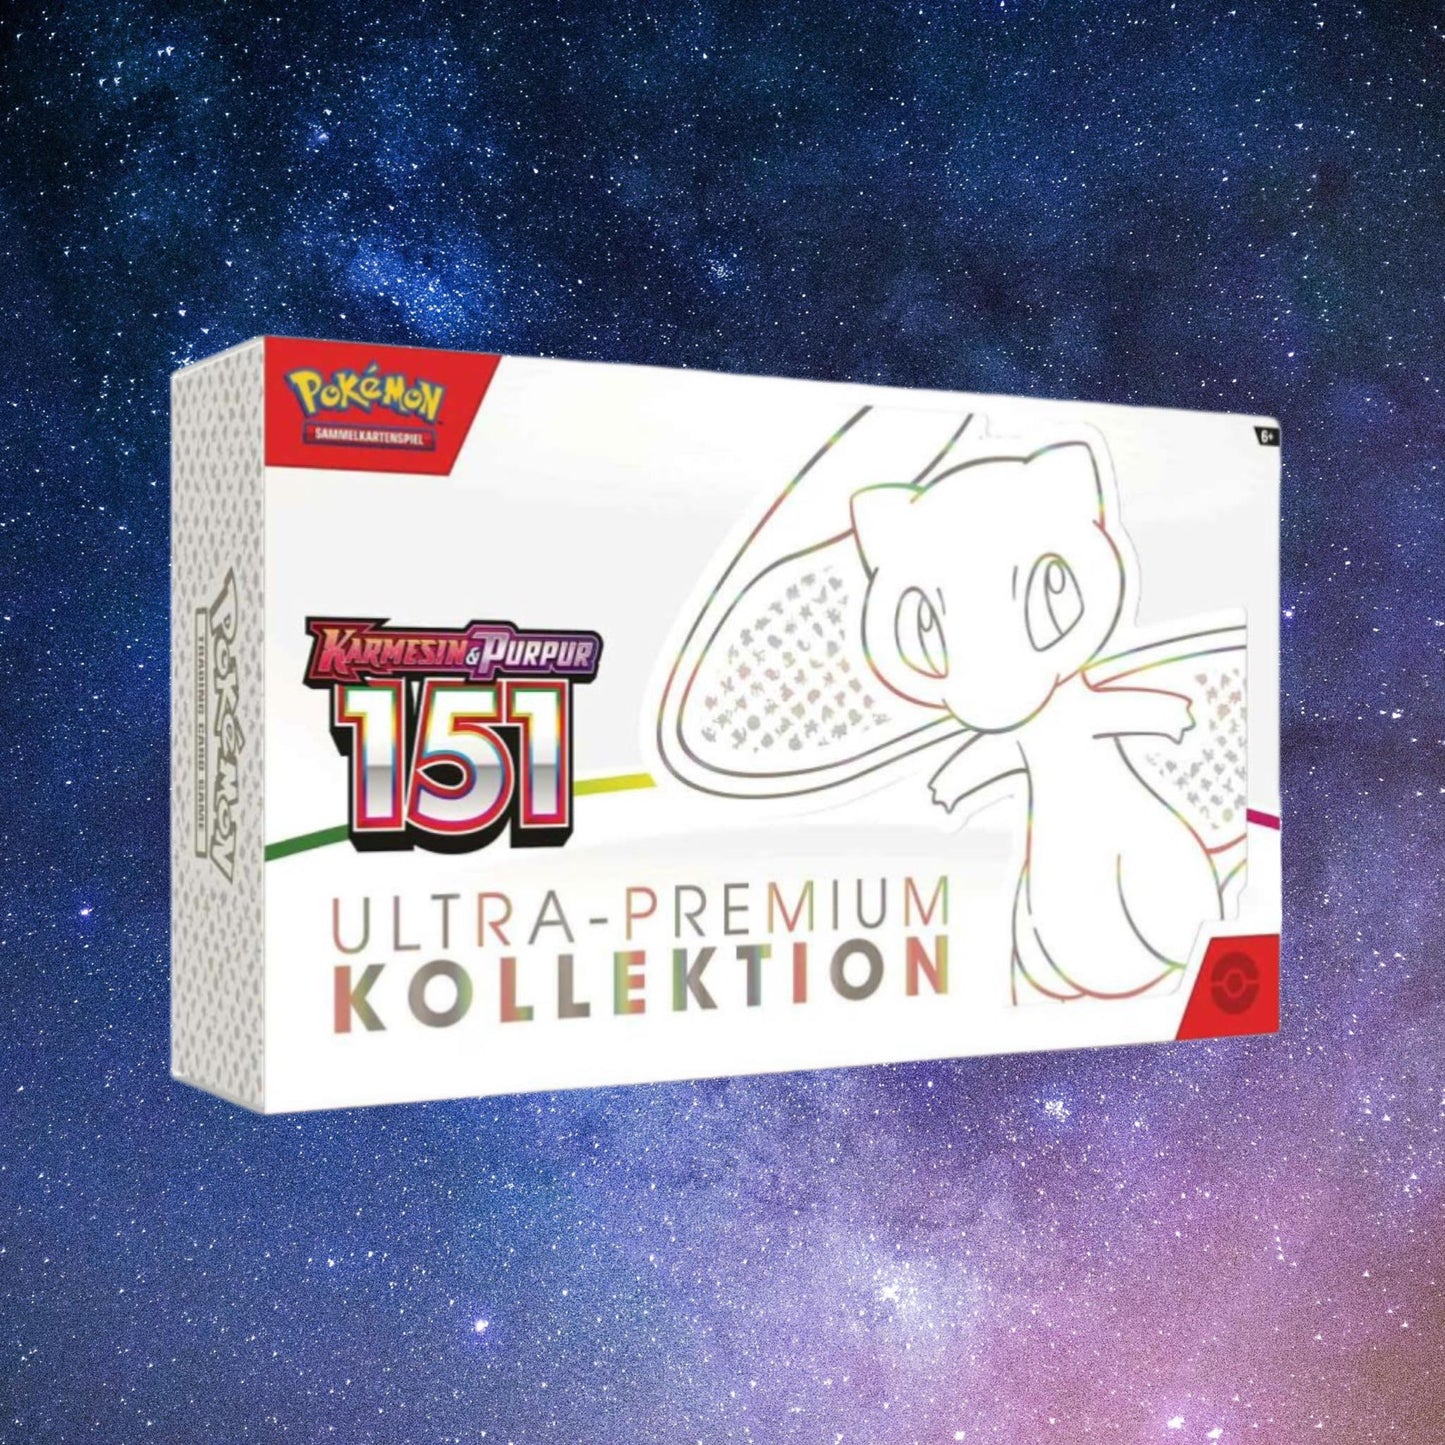 Pokemon 151 Mew Ultra Premium Kollektion